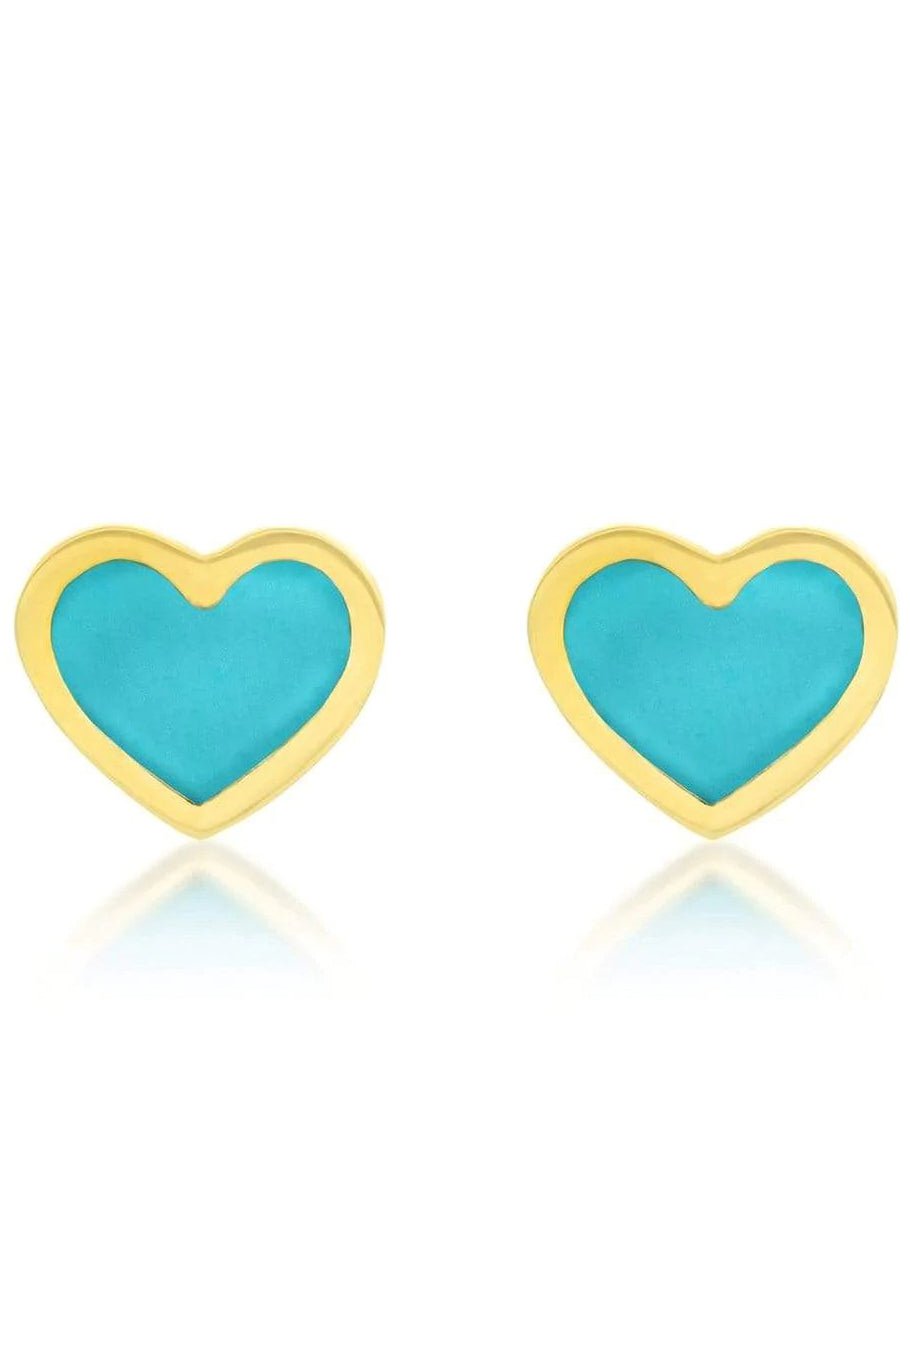 XS Turquoise Inlay Heart Studs JEWELRYFINE JEWELEARRING JENNIFER MEYER   